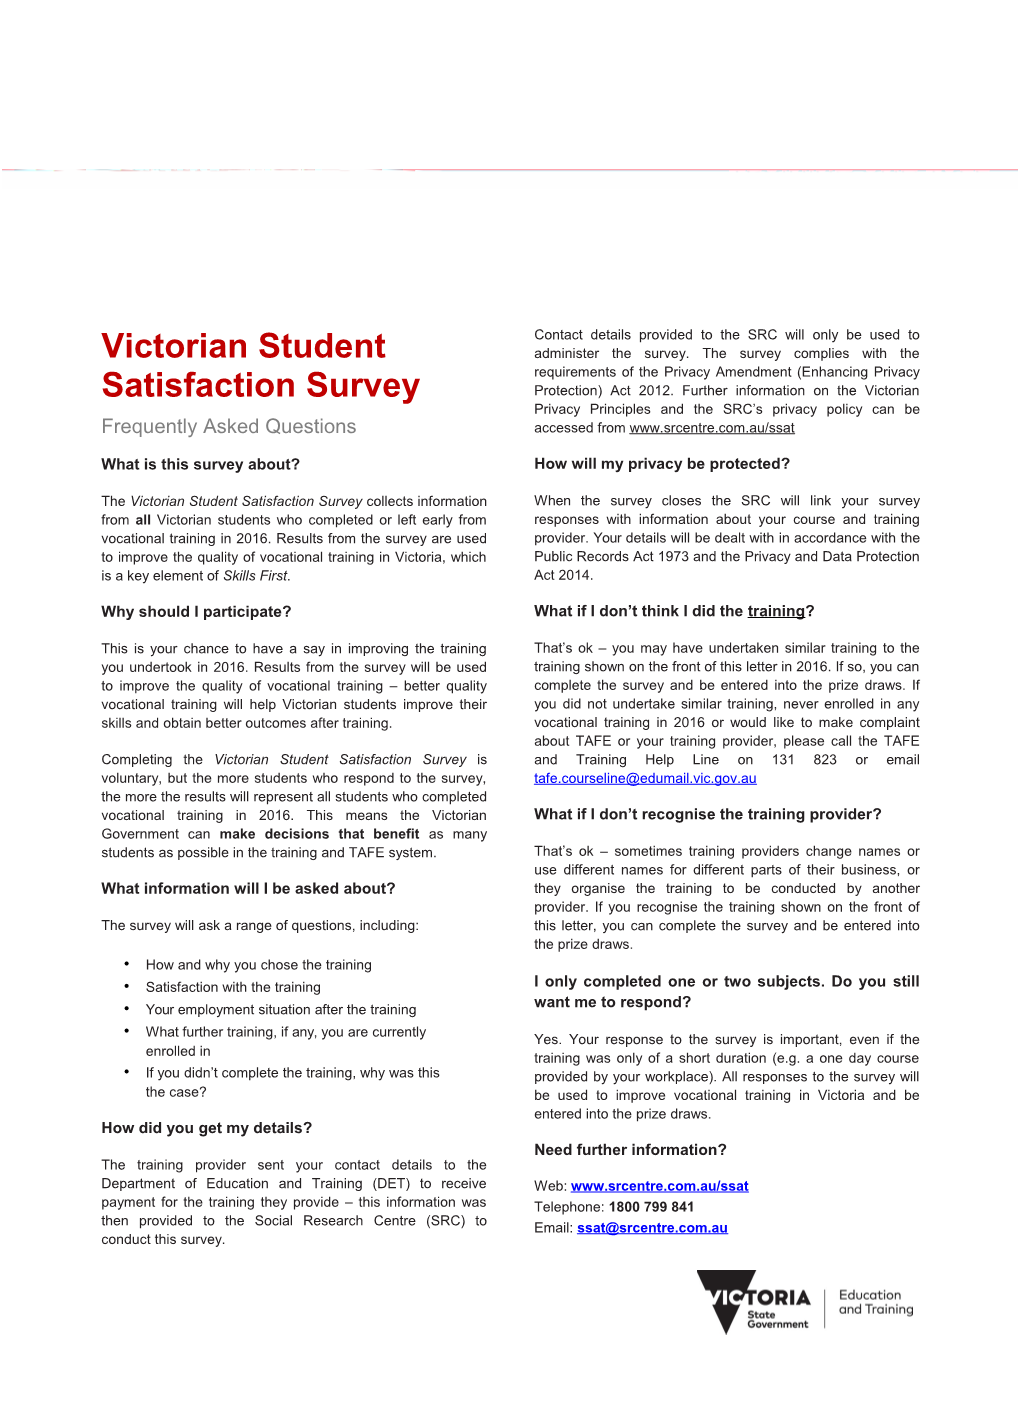 Victorian Student Satisfaction Survey Faqs